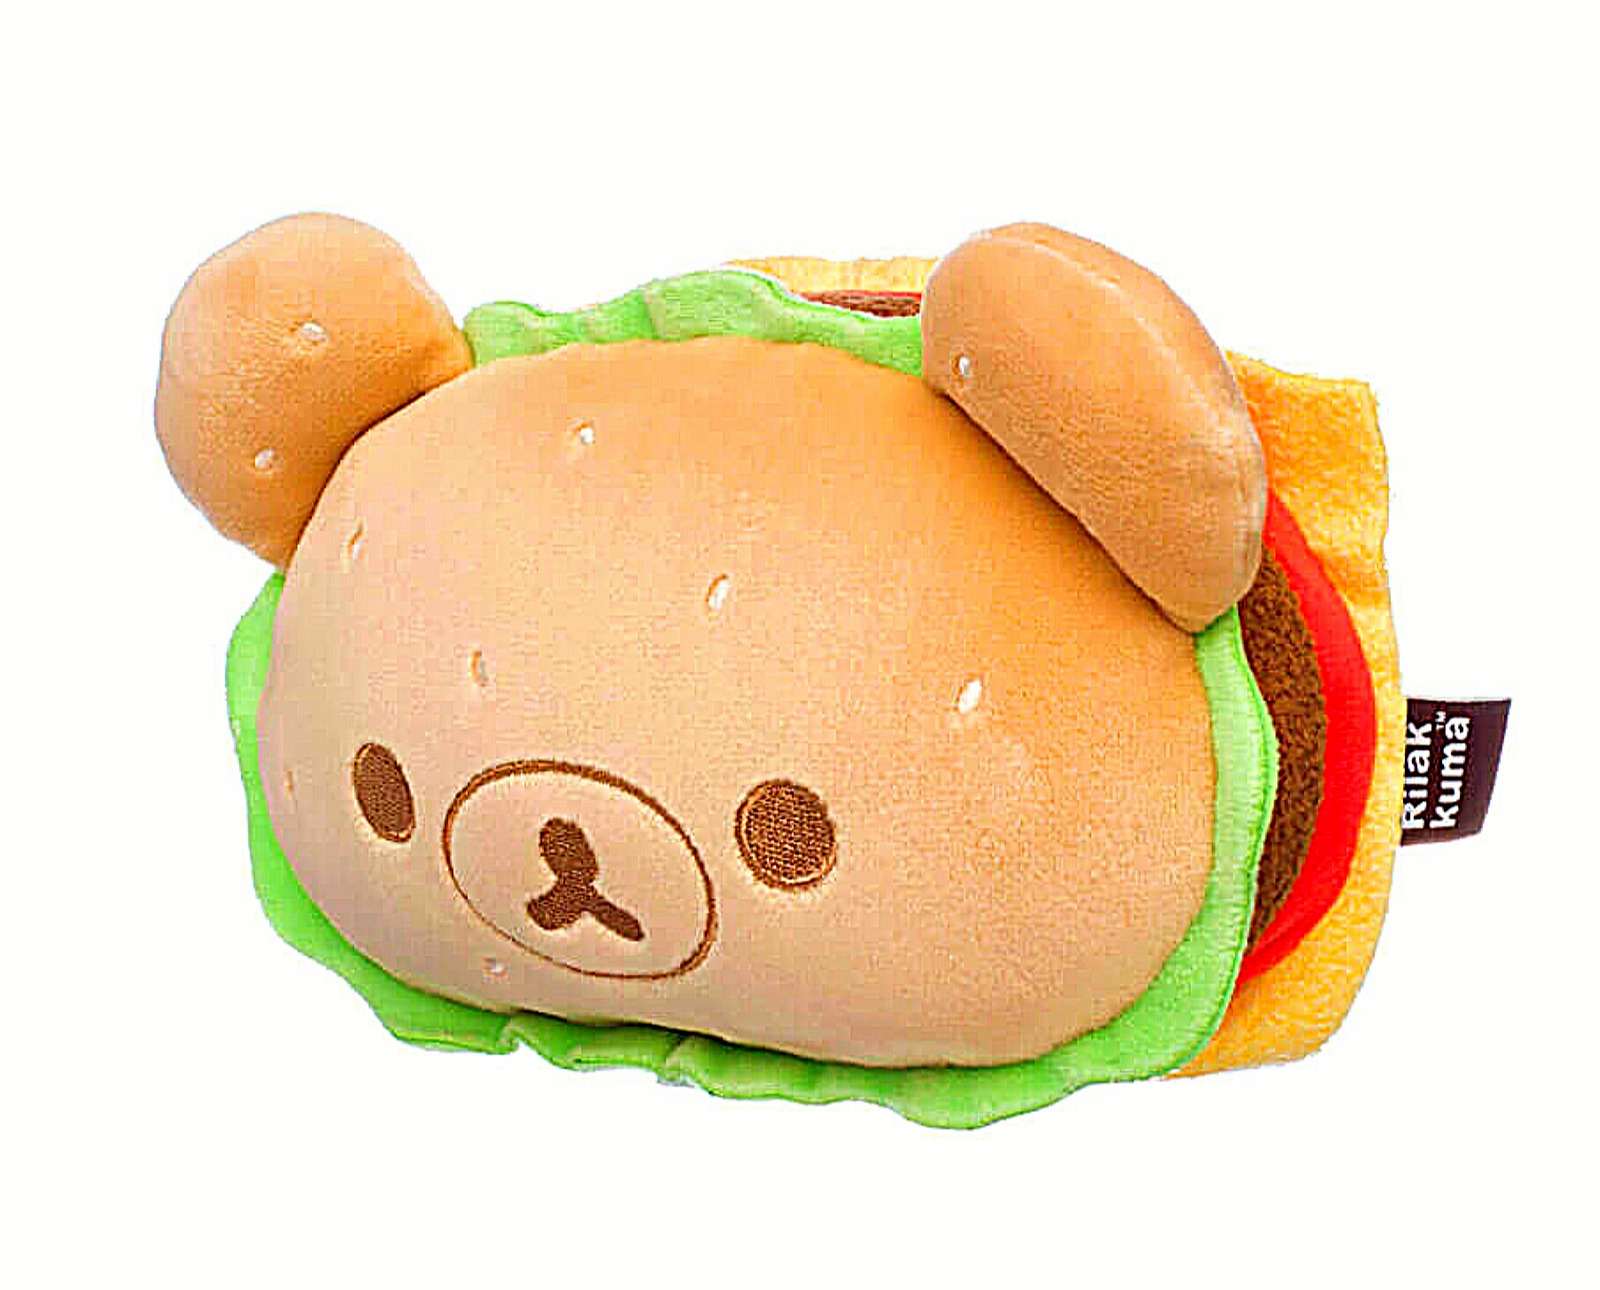 San-X Rilakkuma Original Burger Plush Novelty Stuffed Soft Toy Cheeseburger Bear